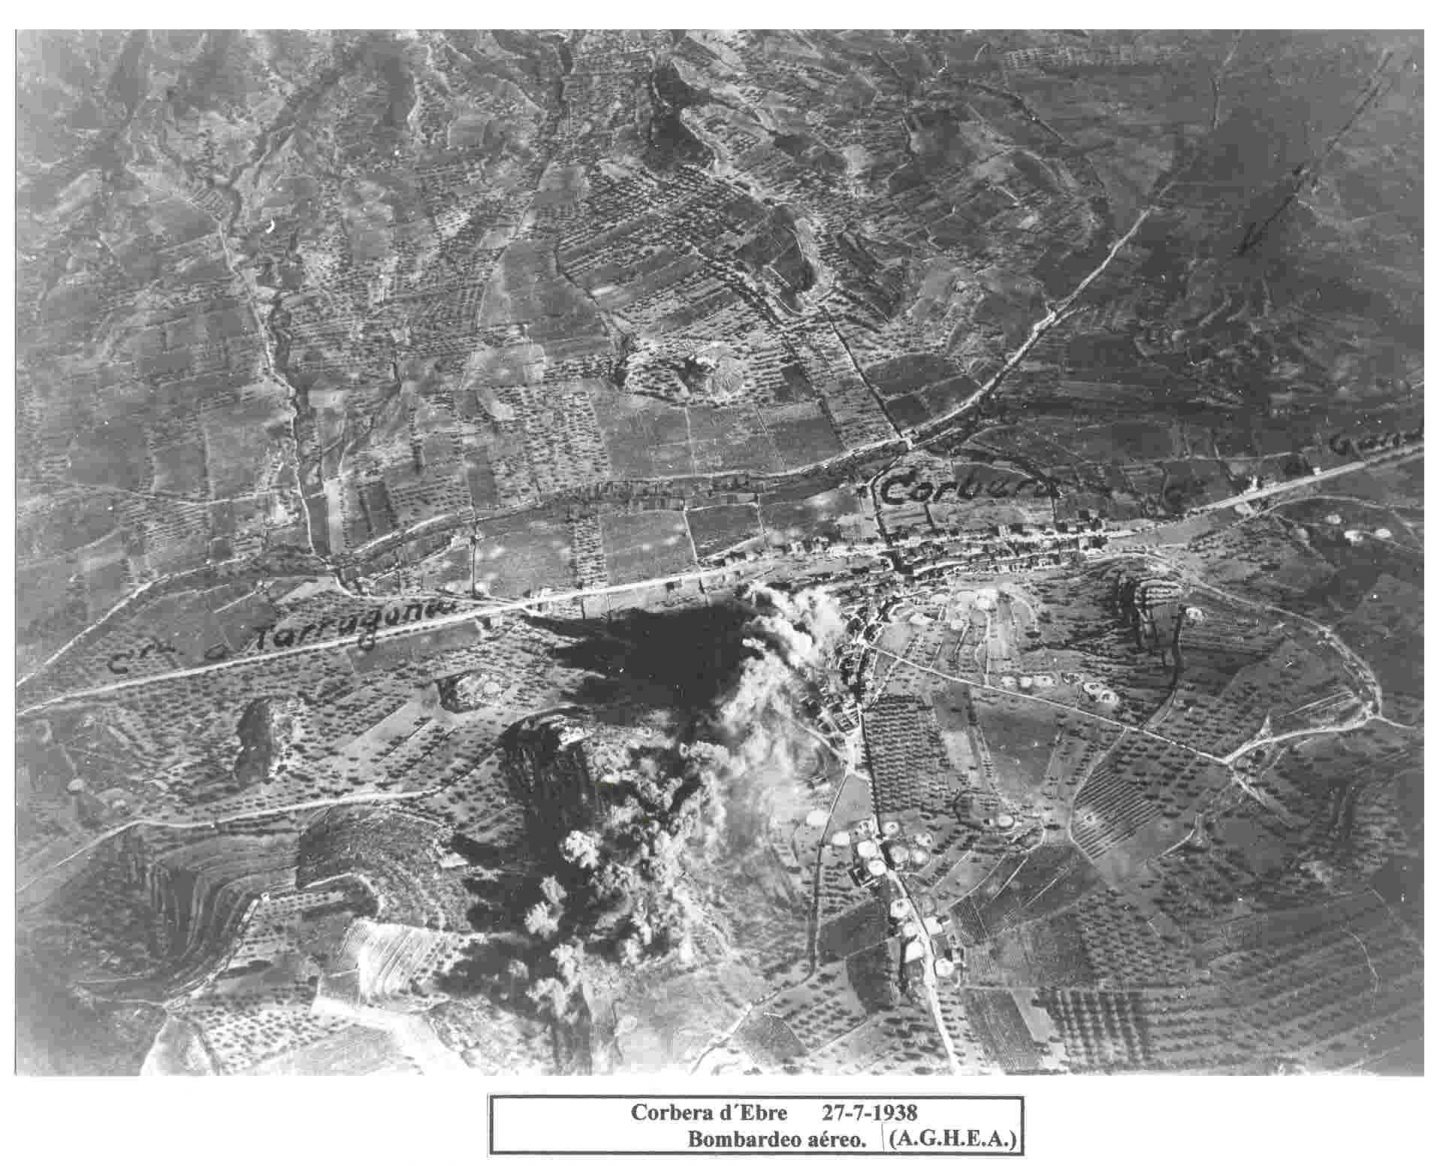 Bombardeo a Corbera d'Ebre en julio de 1938. Foto del Archivo Histórico del Ejército del Aire.